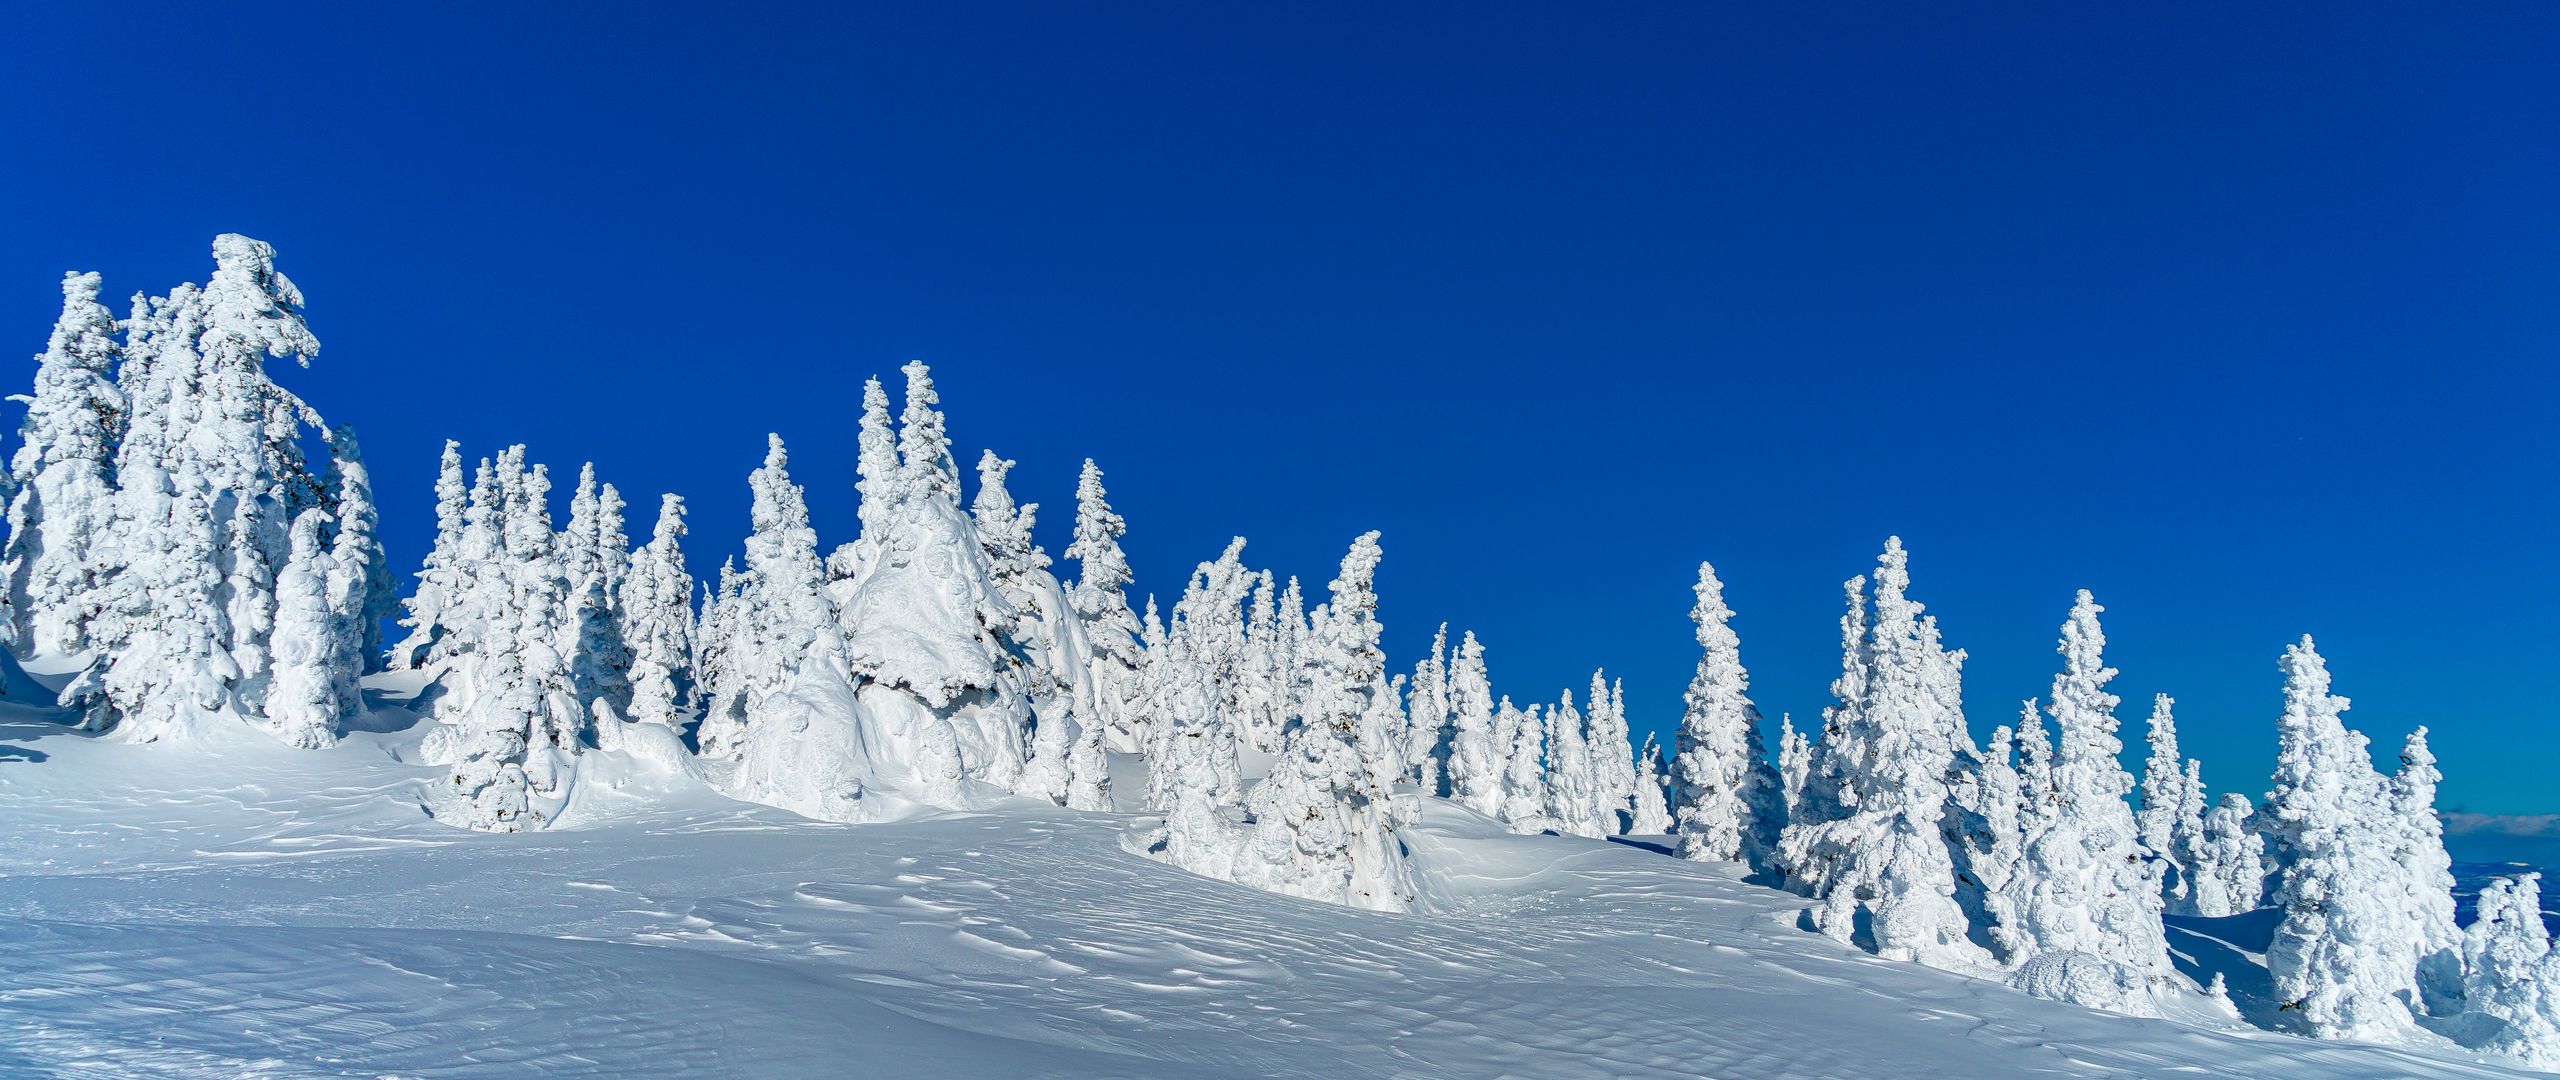 Download wallpaper 2560x1080 snow, trees, winter, snowy, landscape dual ...